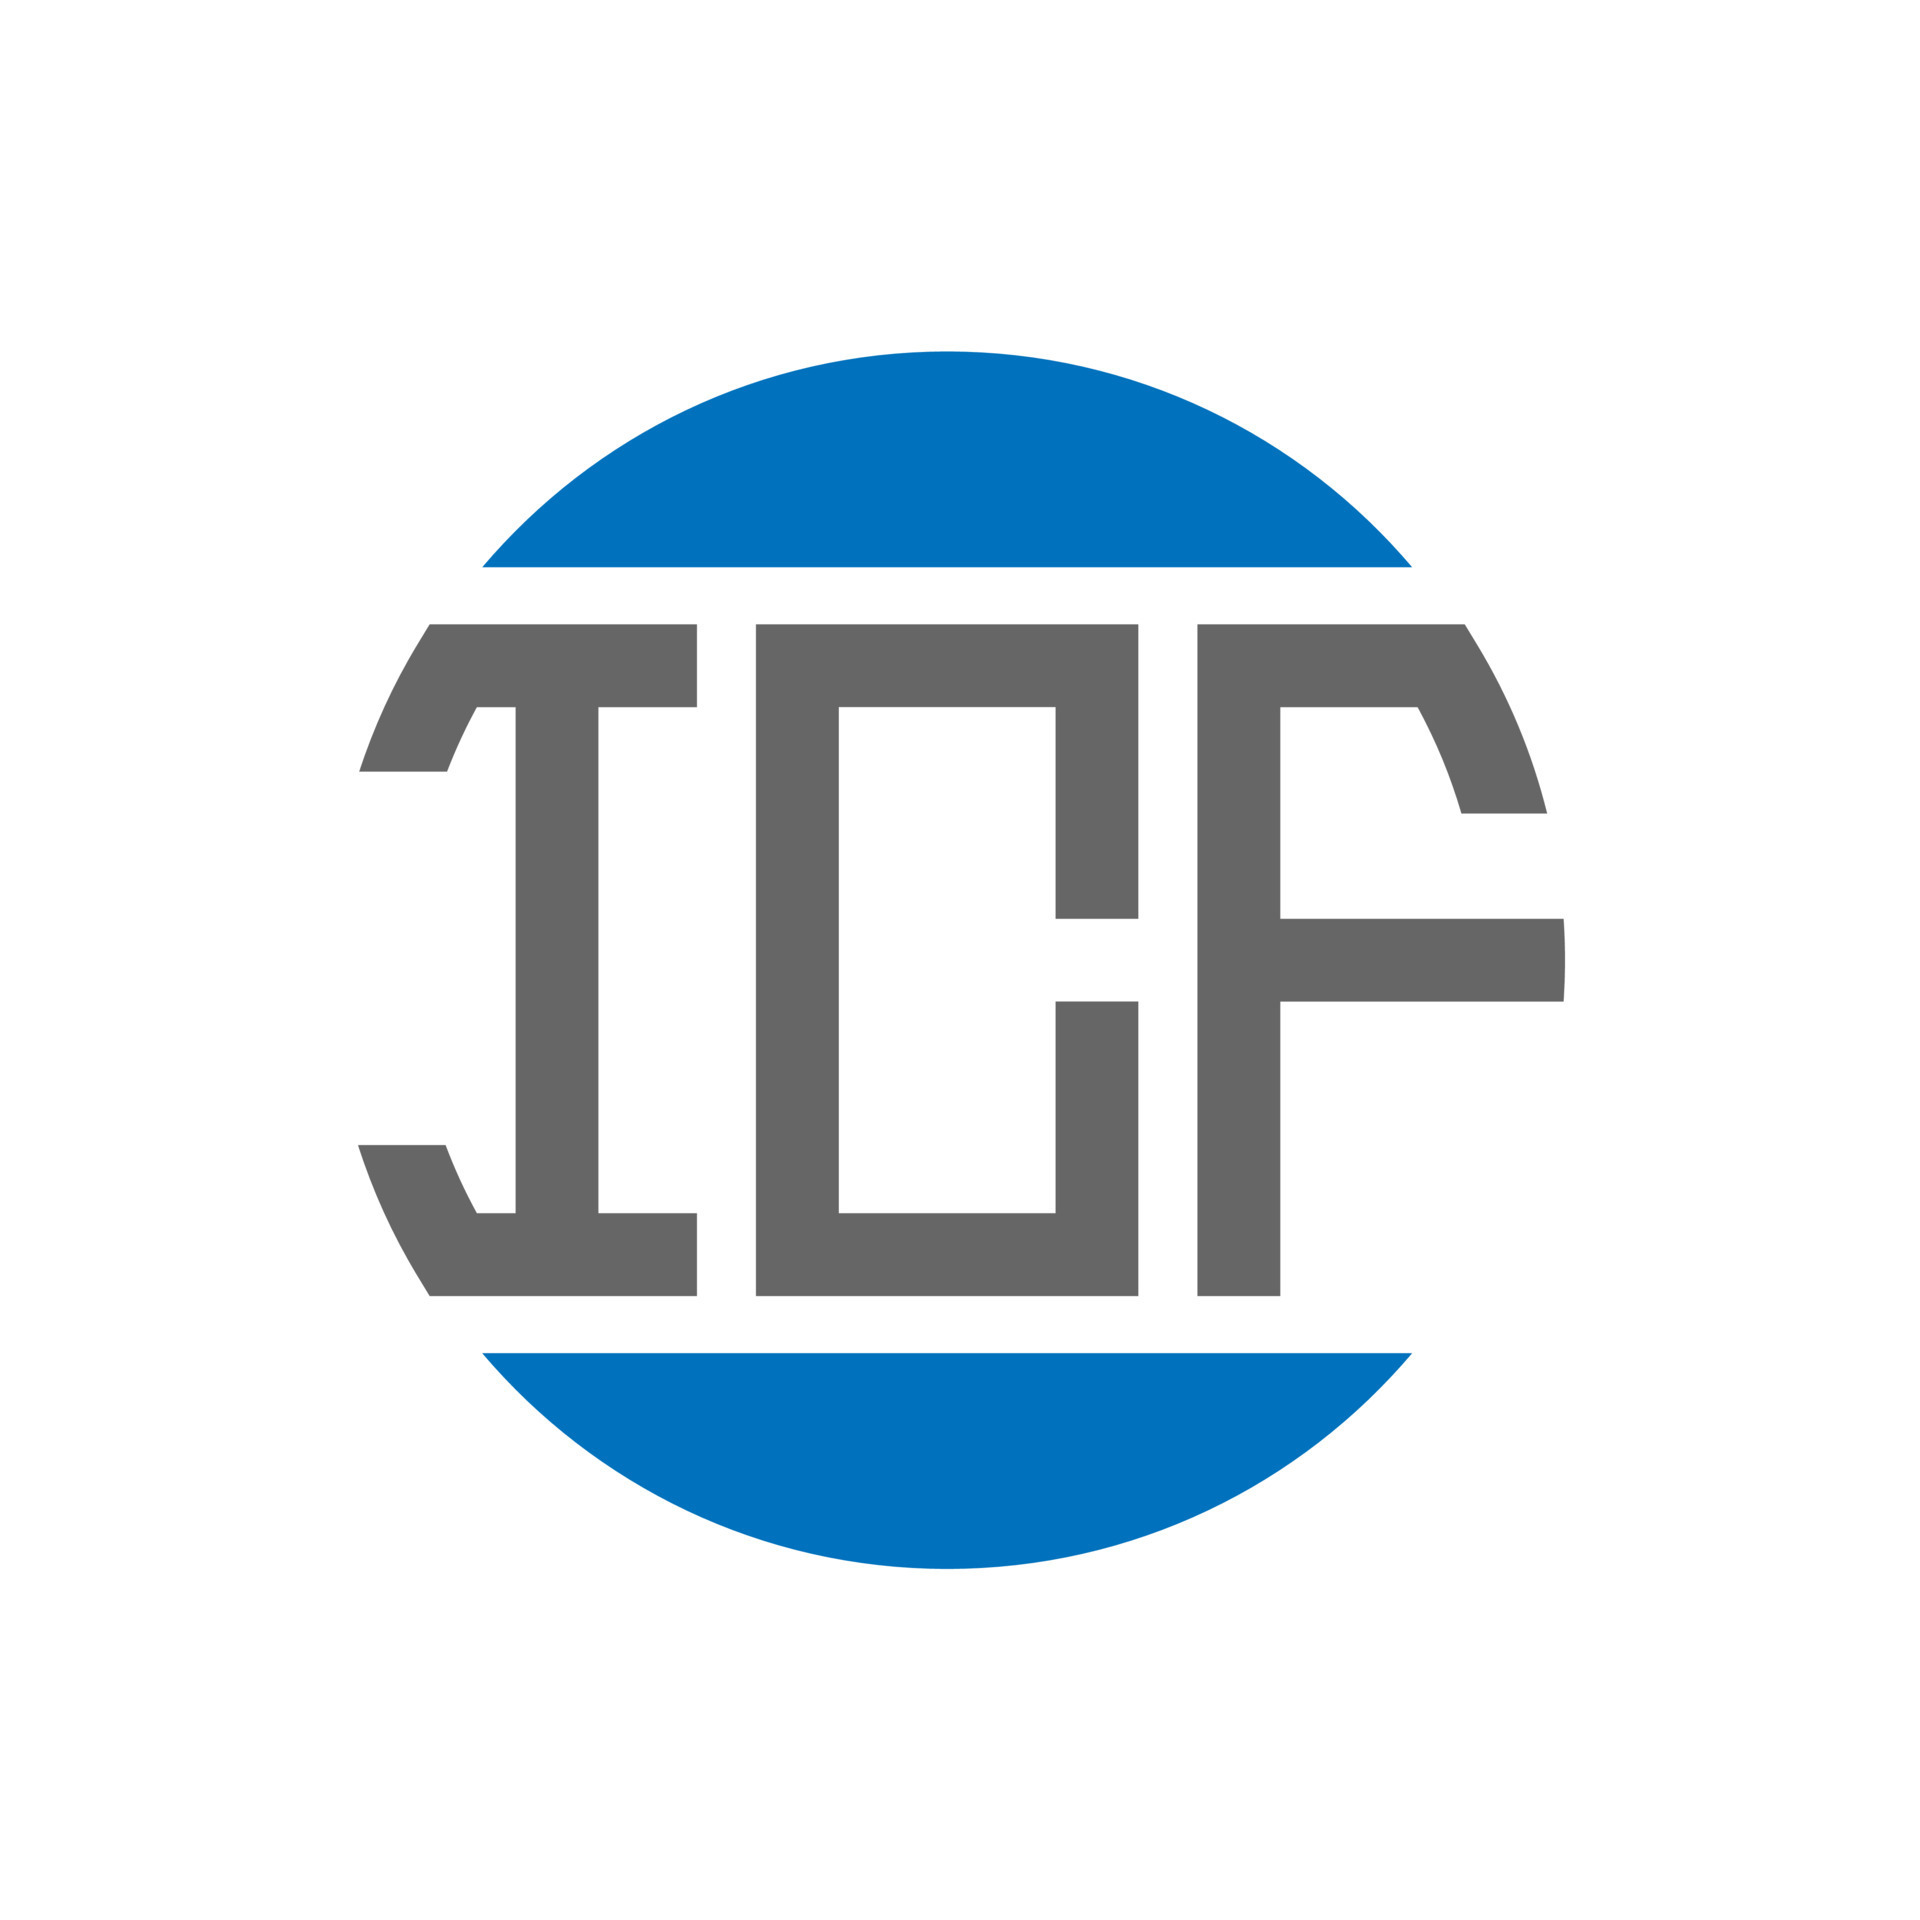 Block ICF Logo by Md Nuruzzaman on Dribbble